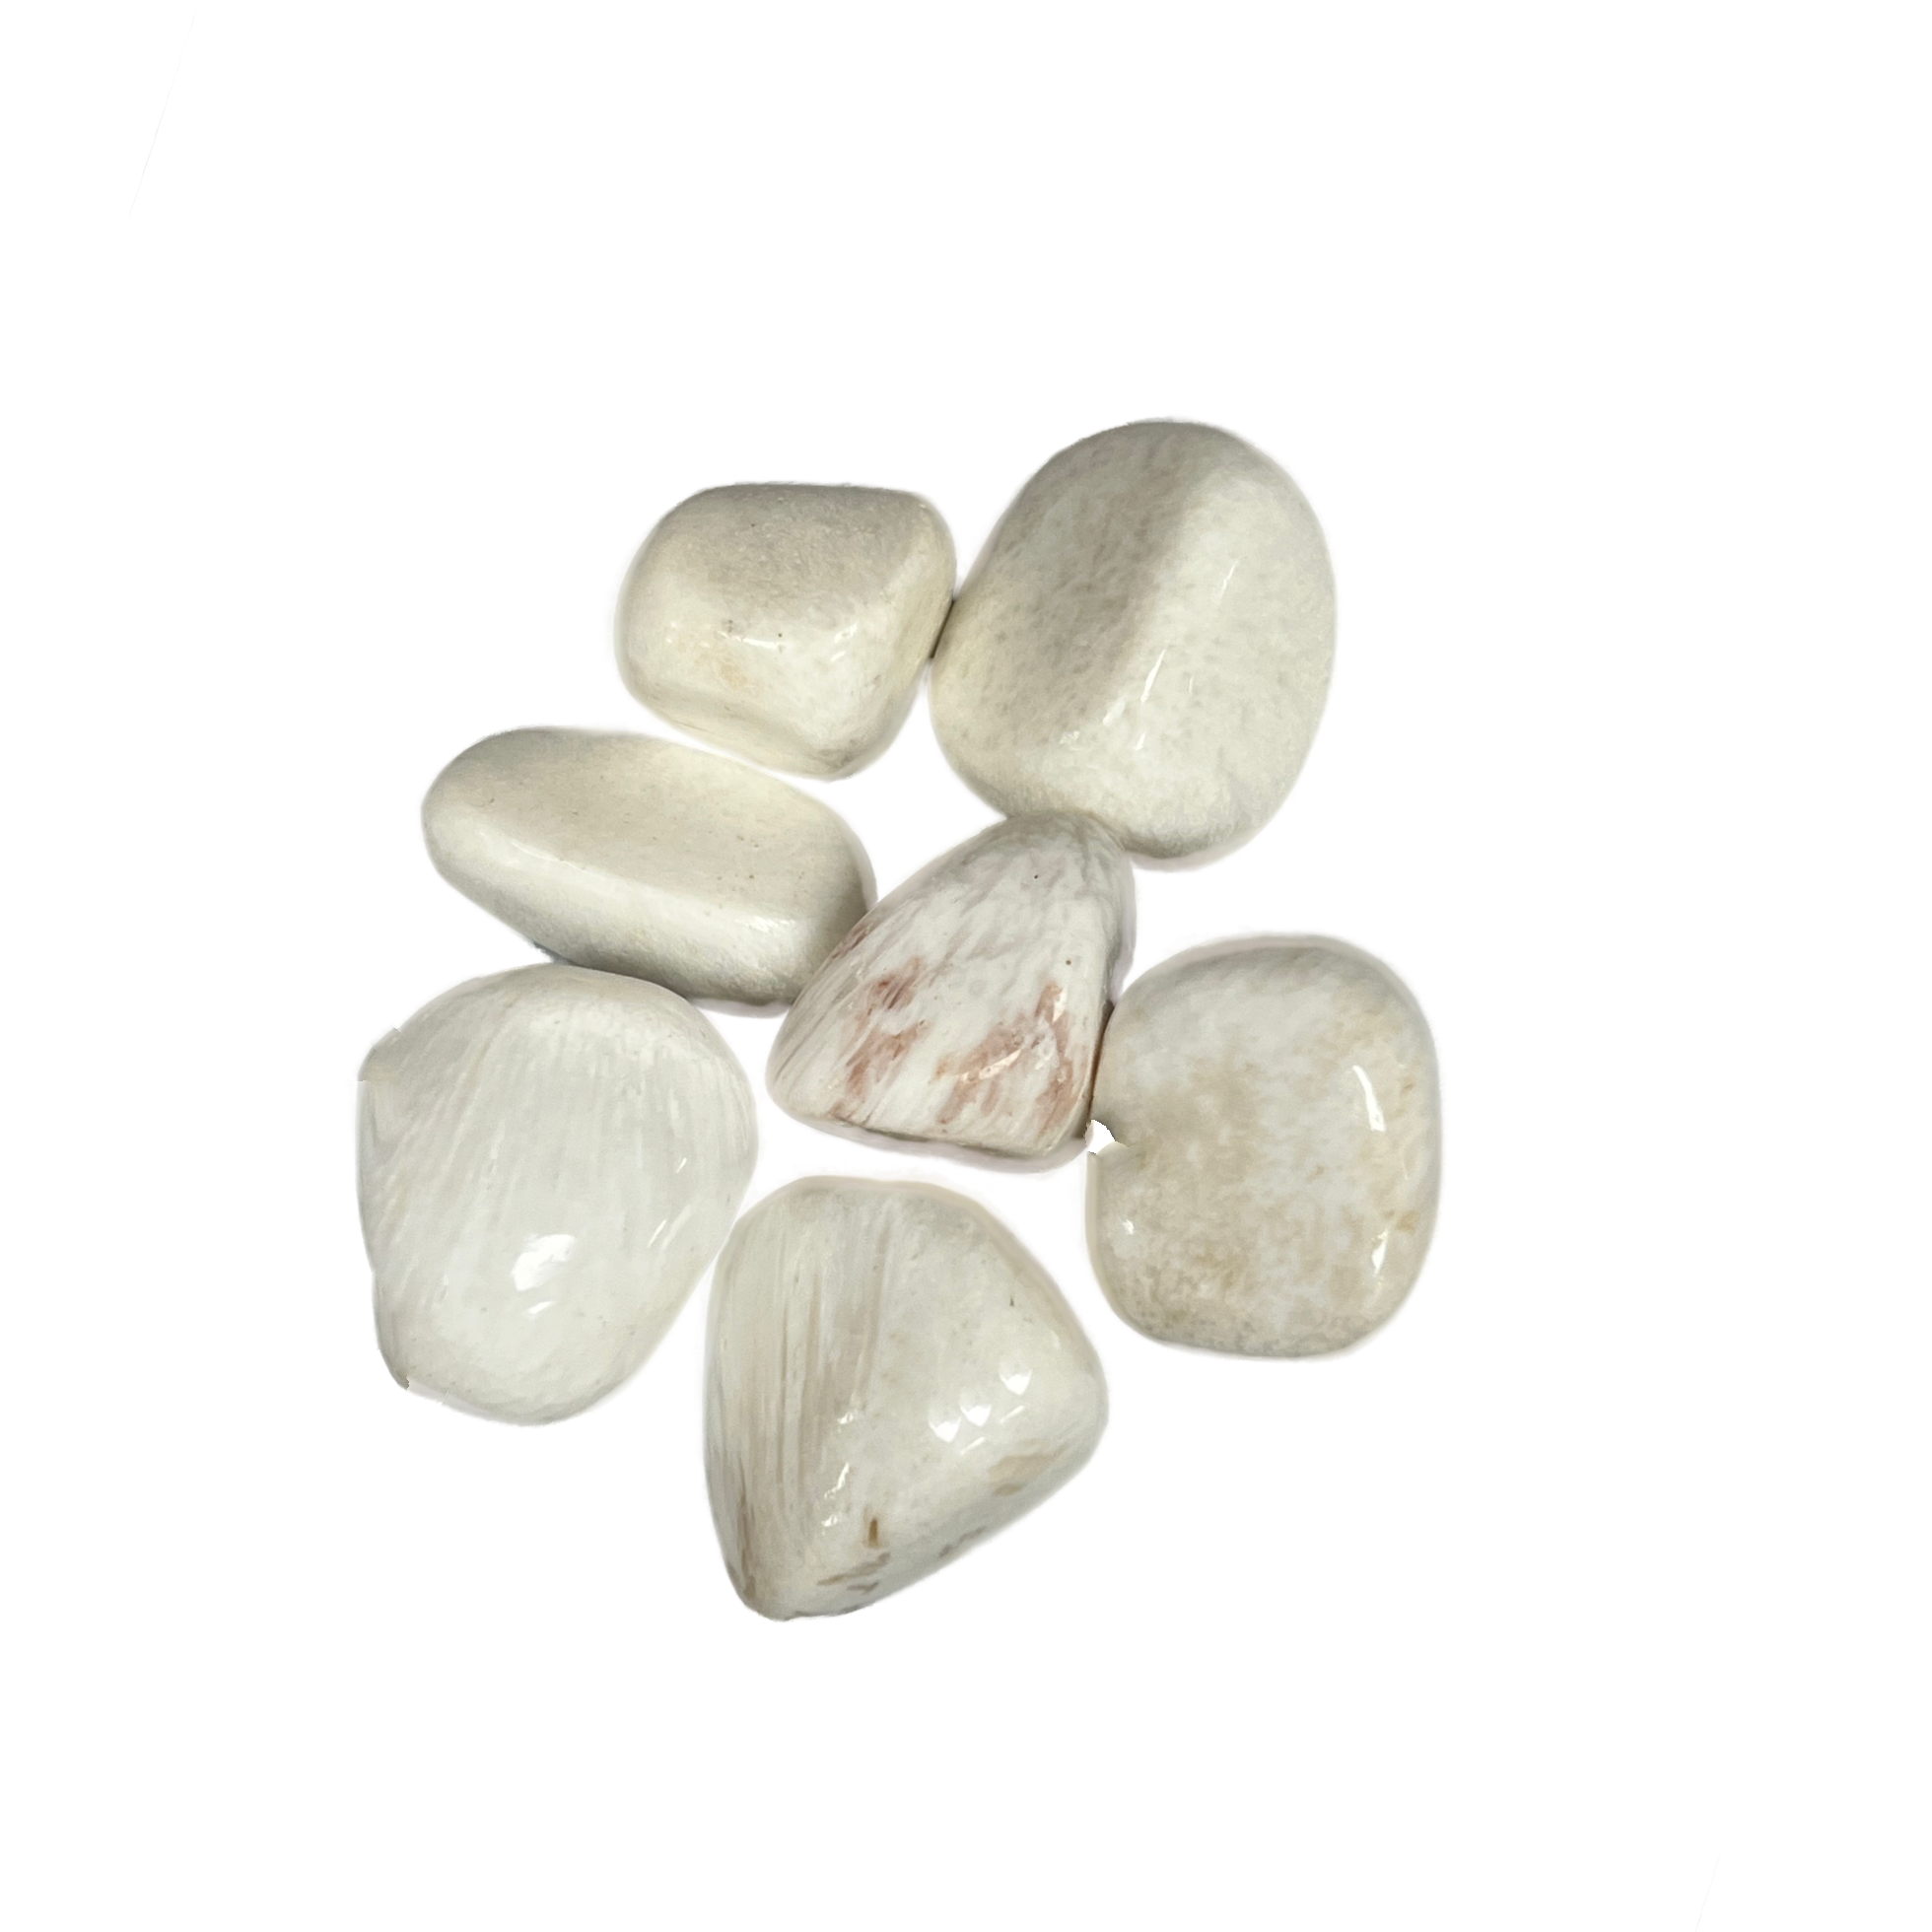 White stones with translucent veins 